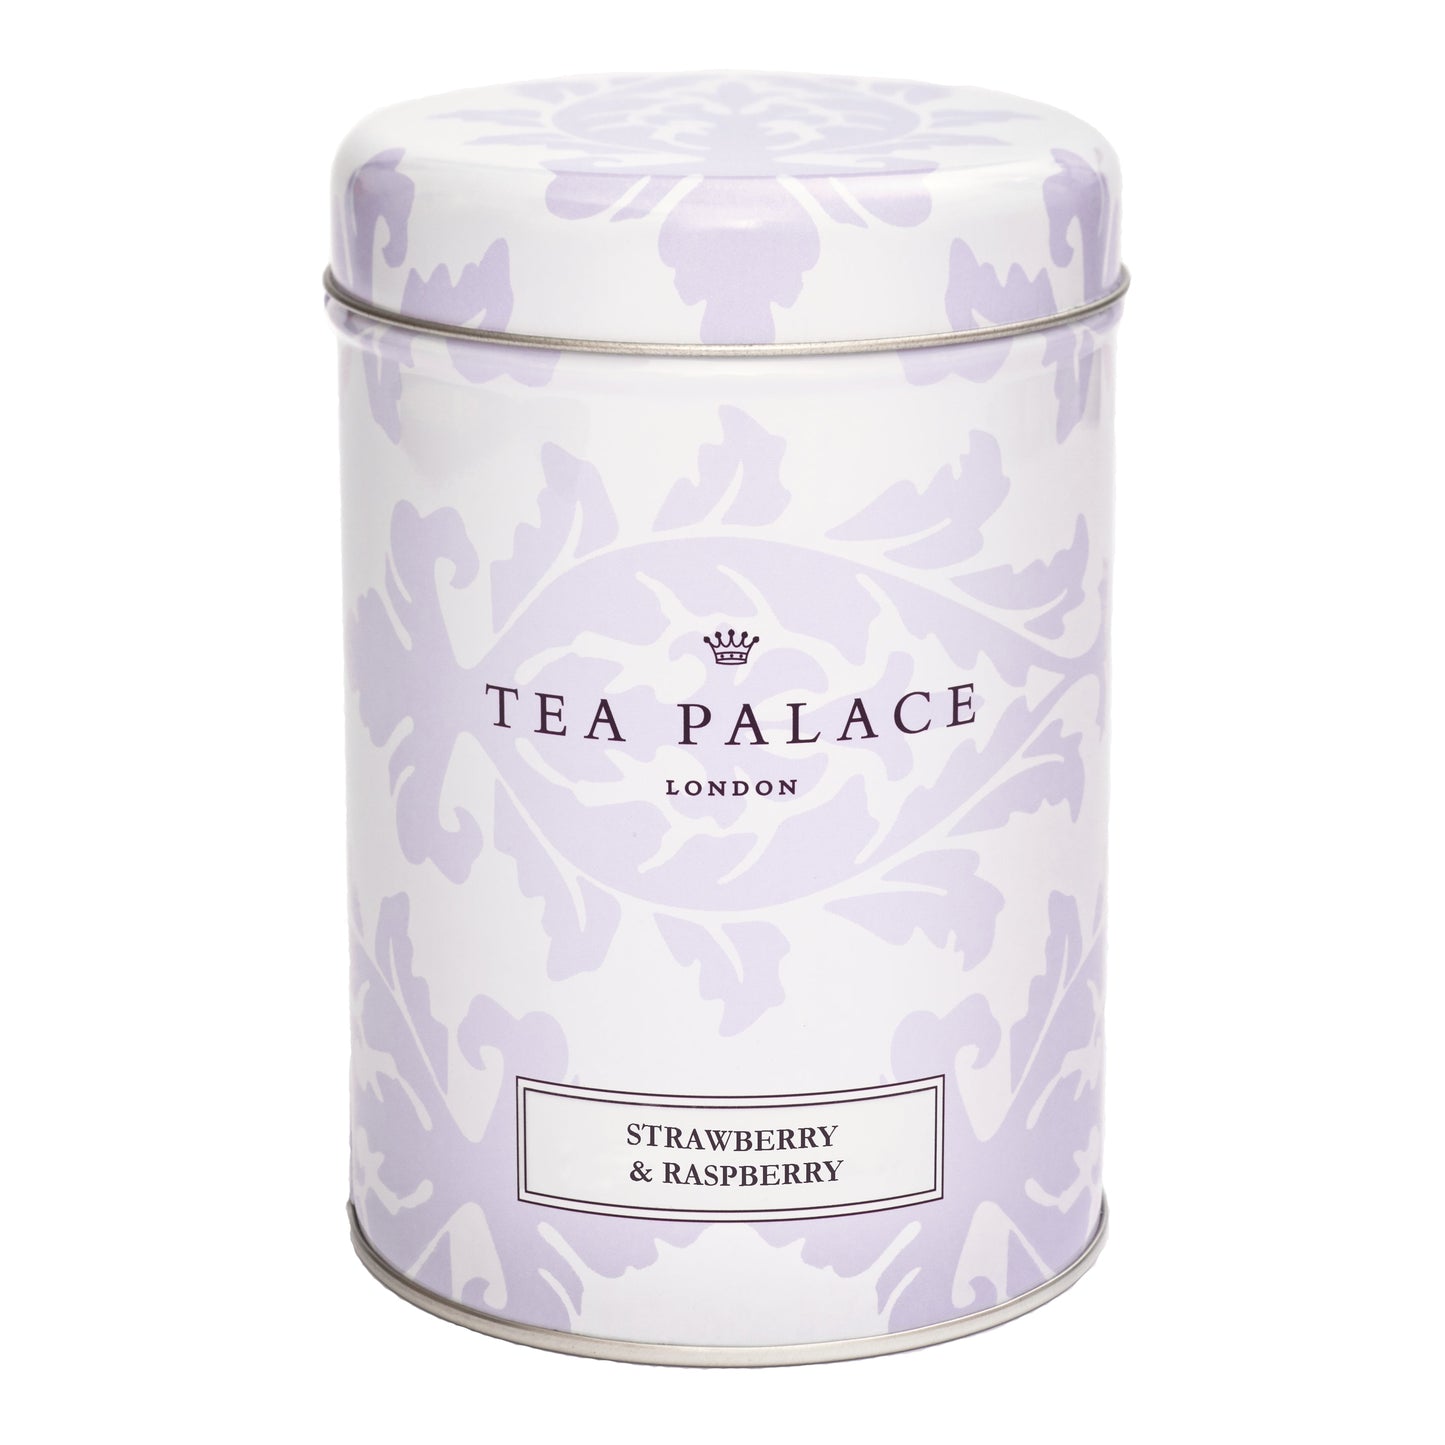 Tea Palace loose leaf tea caddy